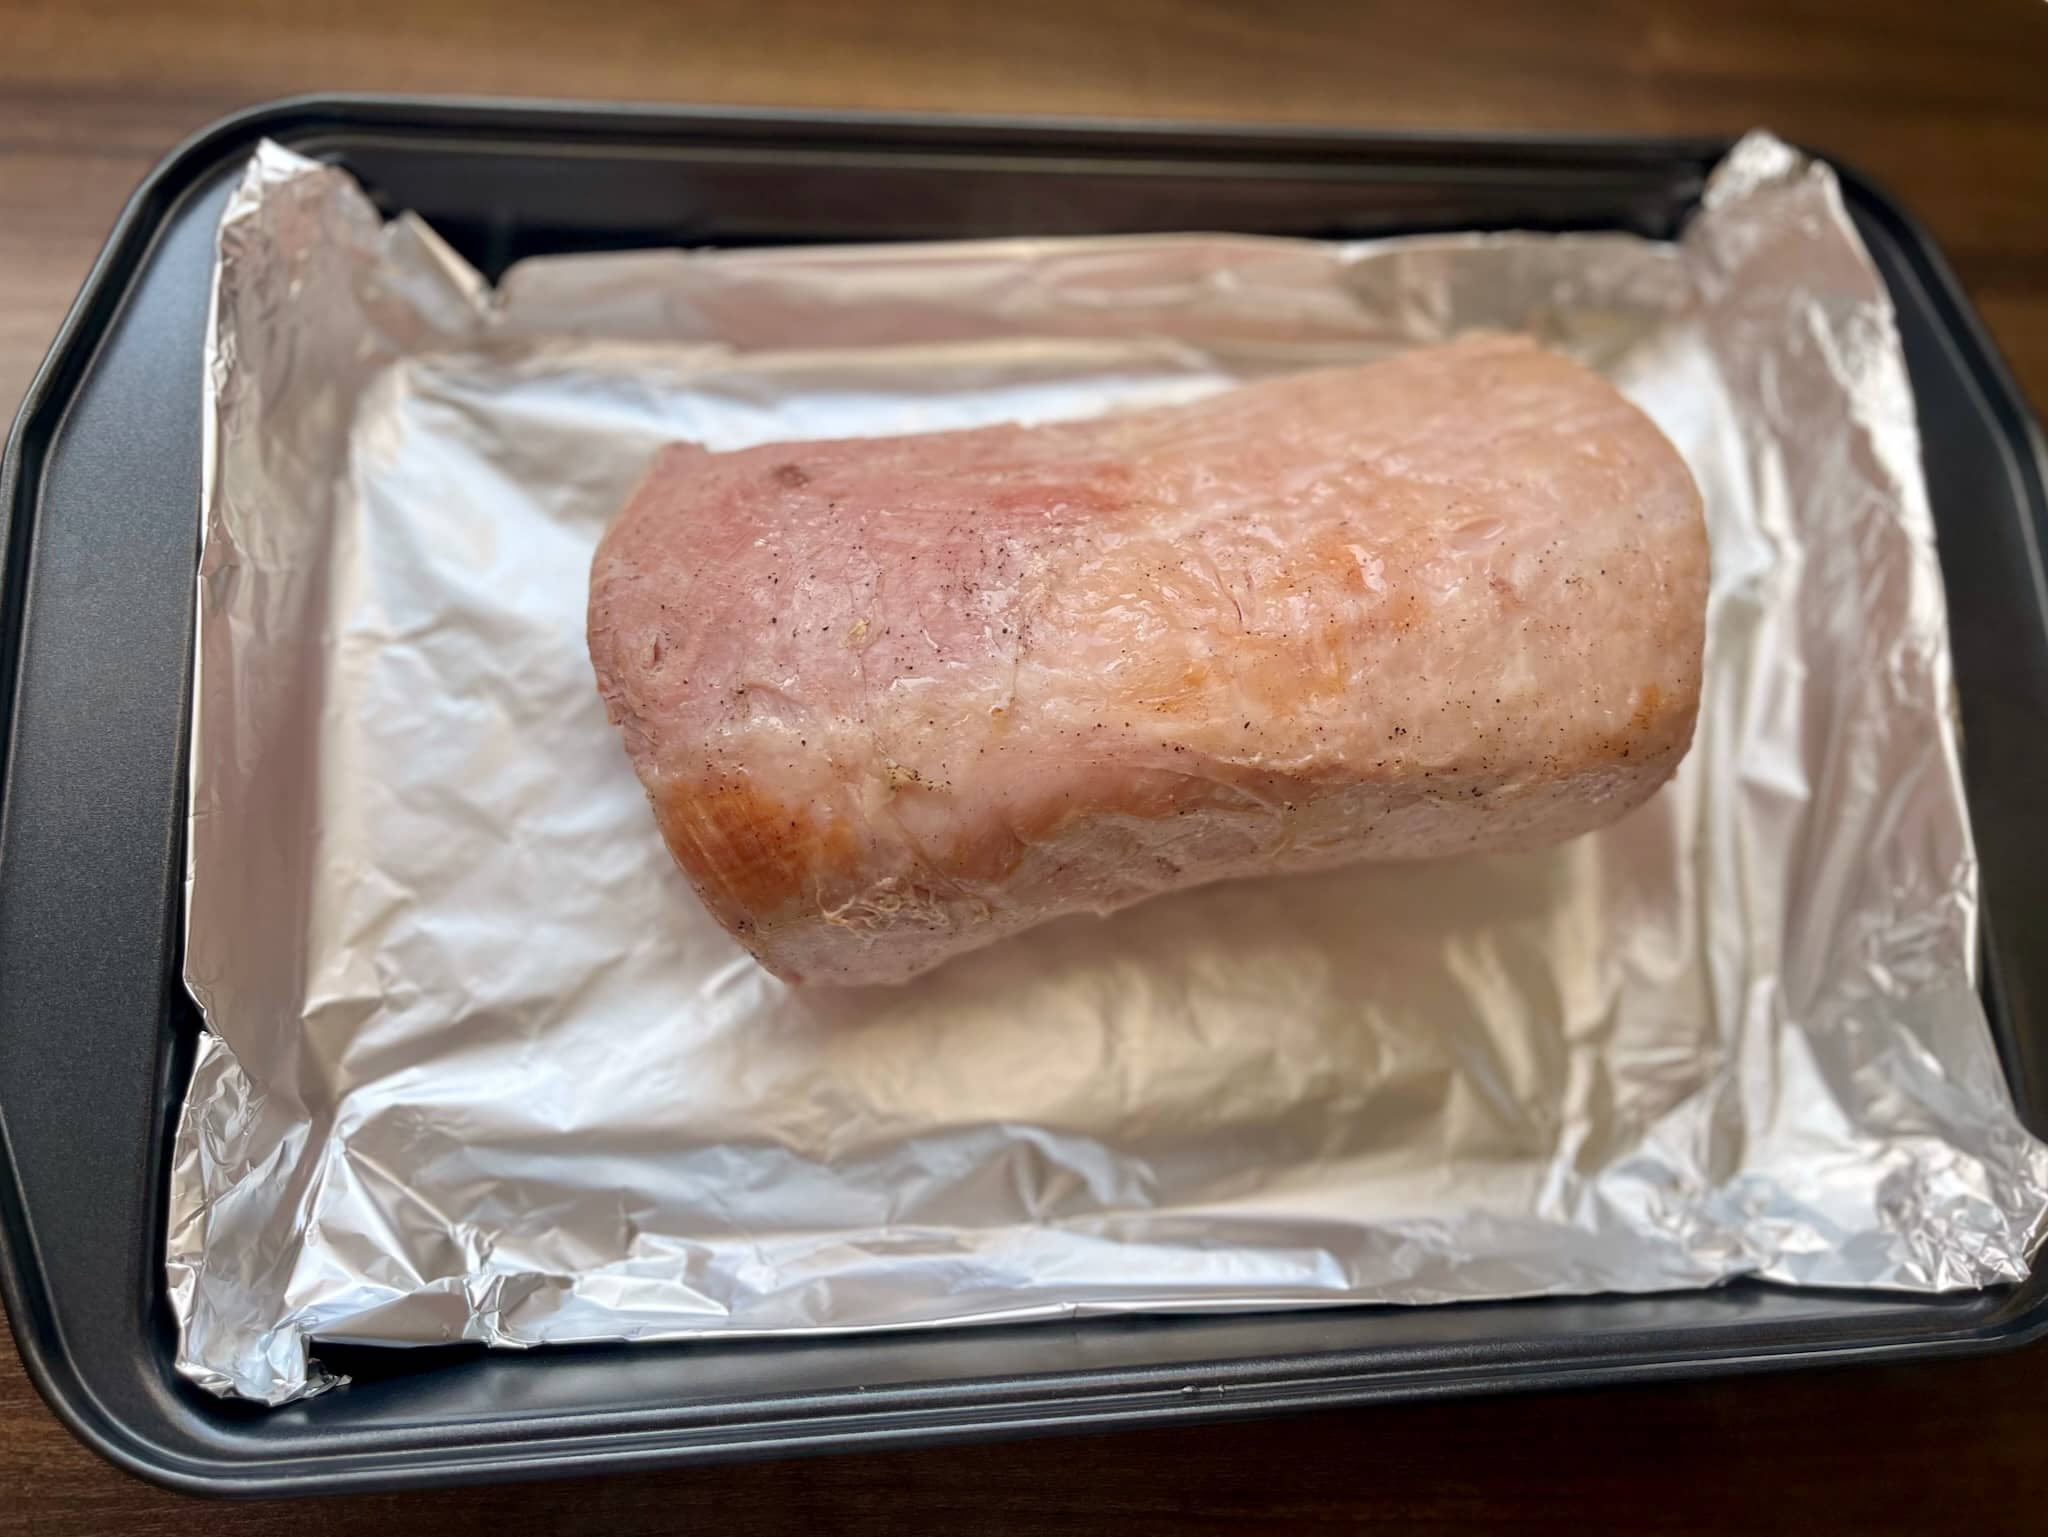 Baked marinated pork loin on a baking tray with fresh aluminium foil